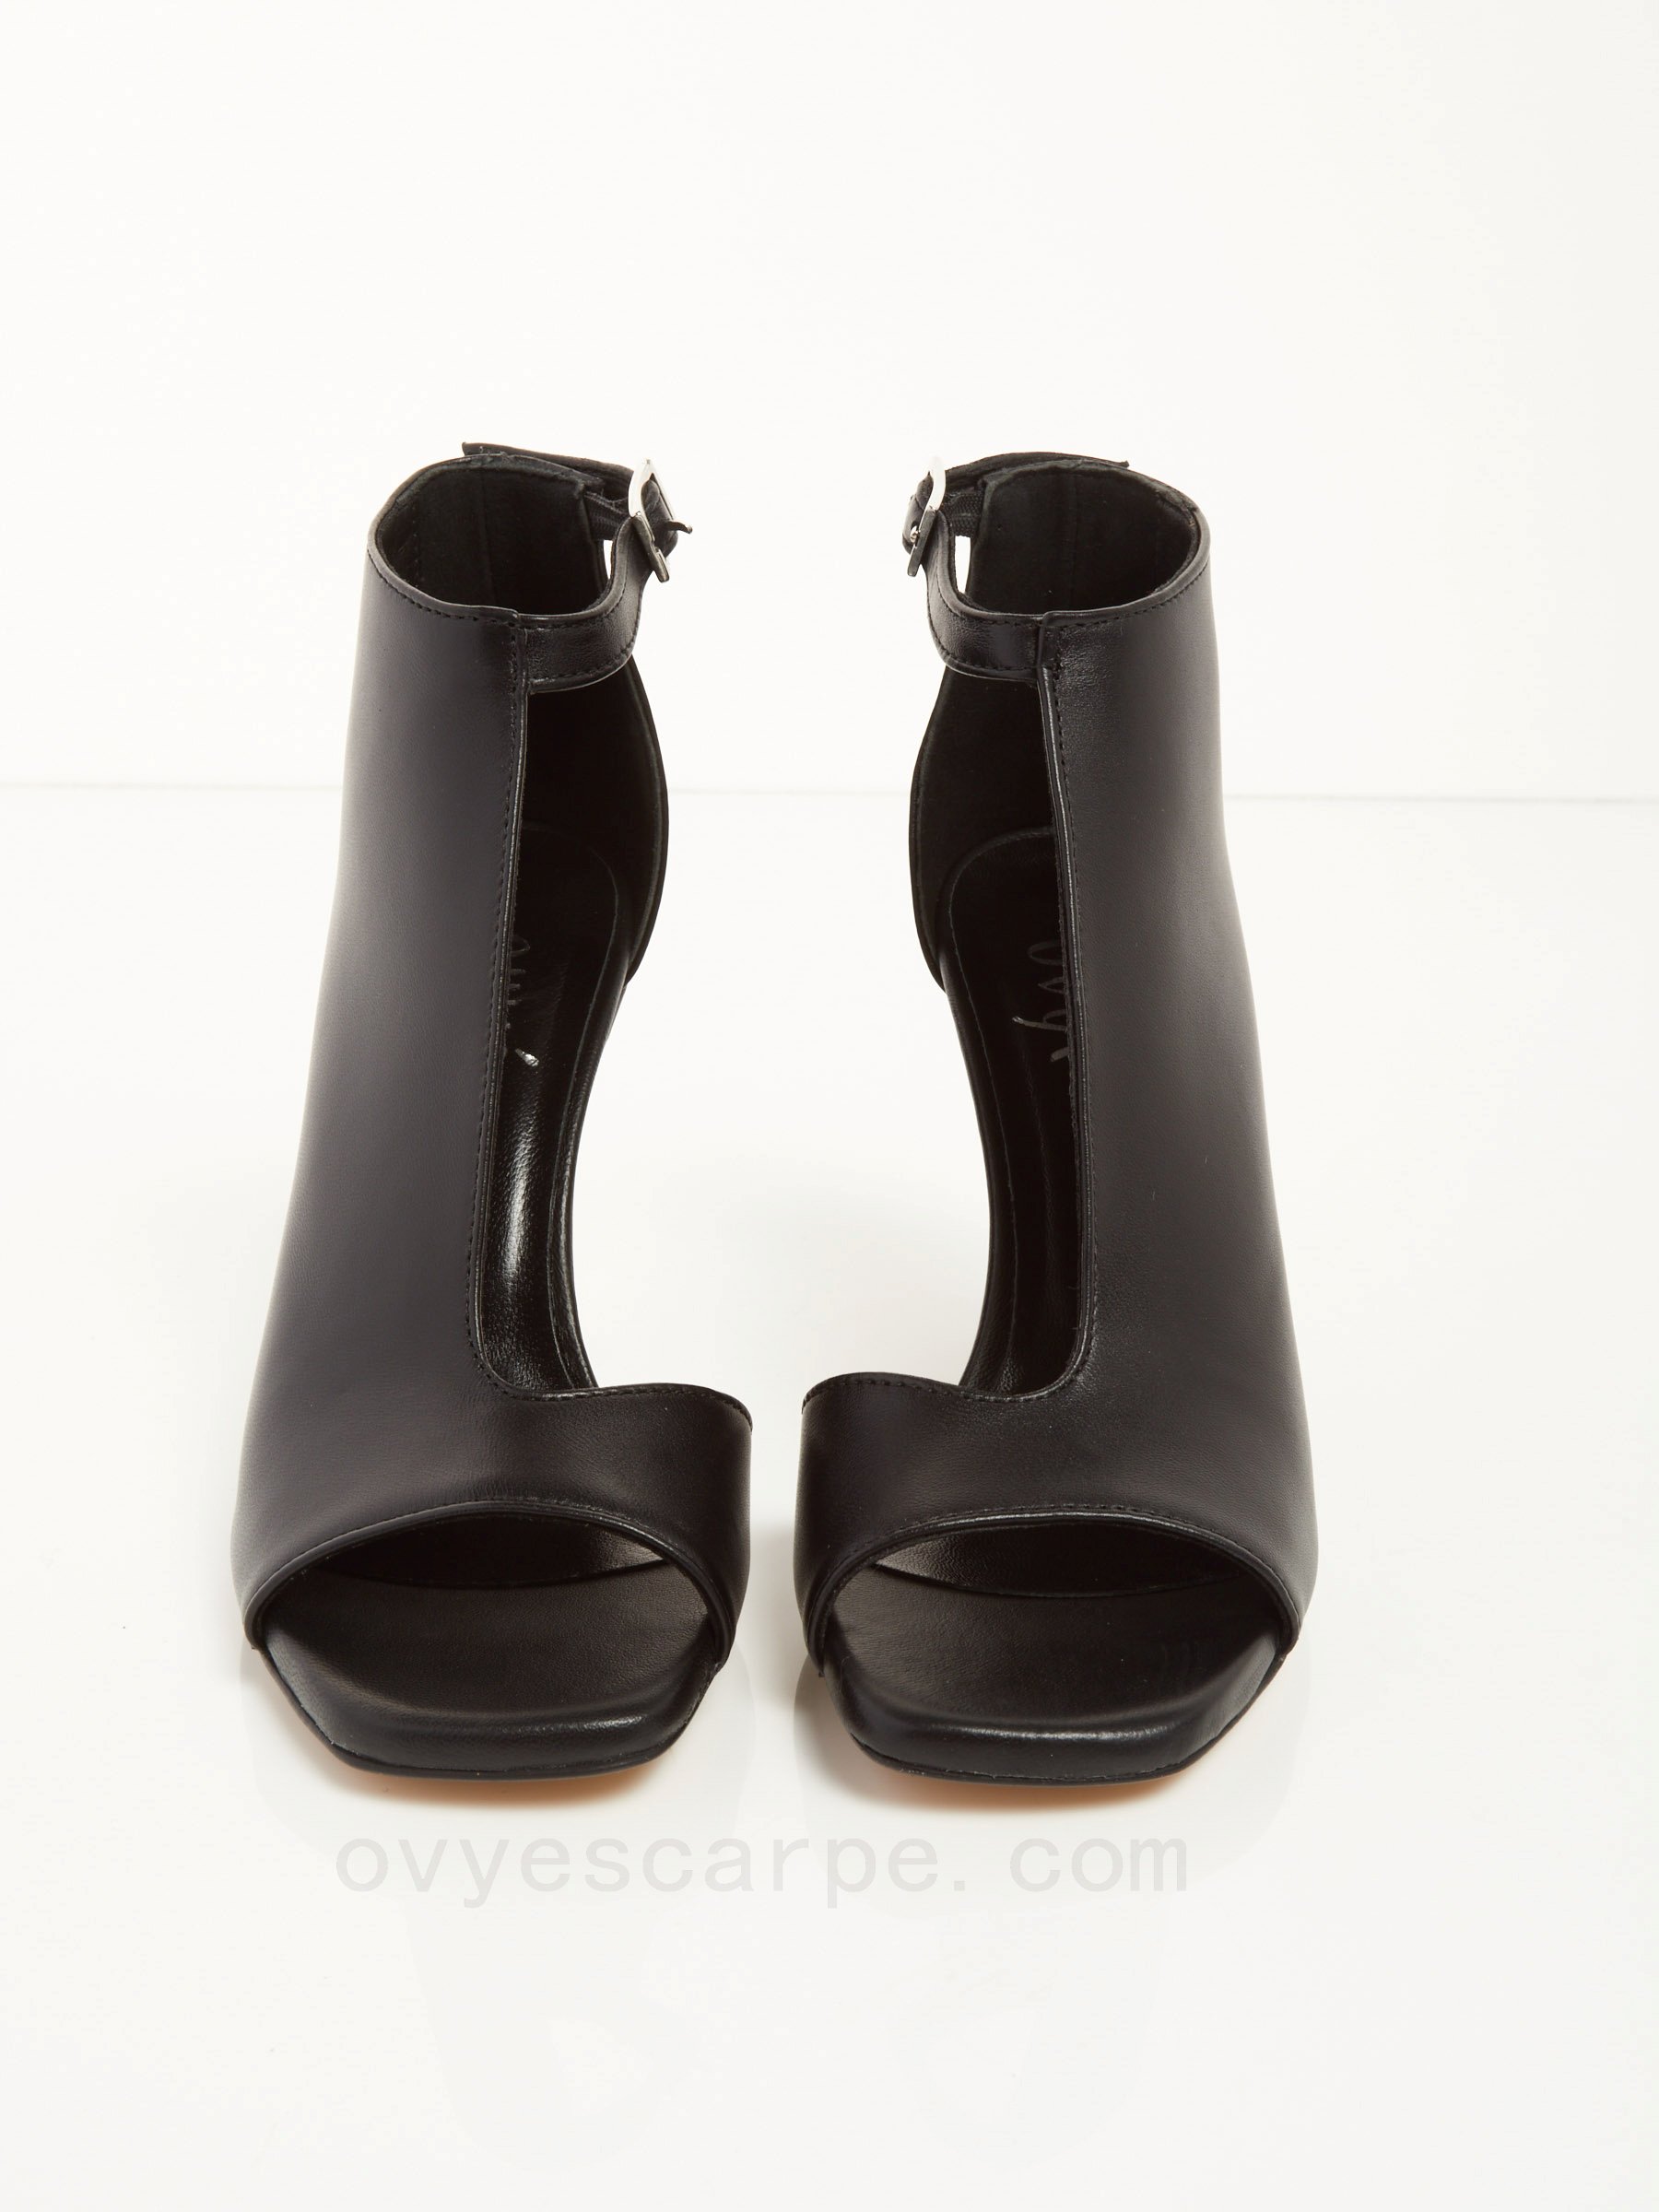 Prezzi Bassi Leather Sandals F08161027-0426 Original